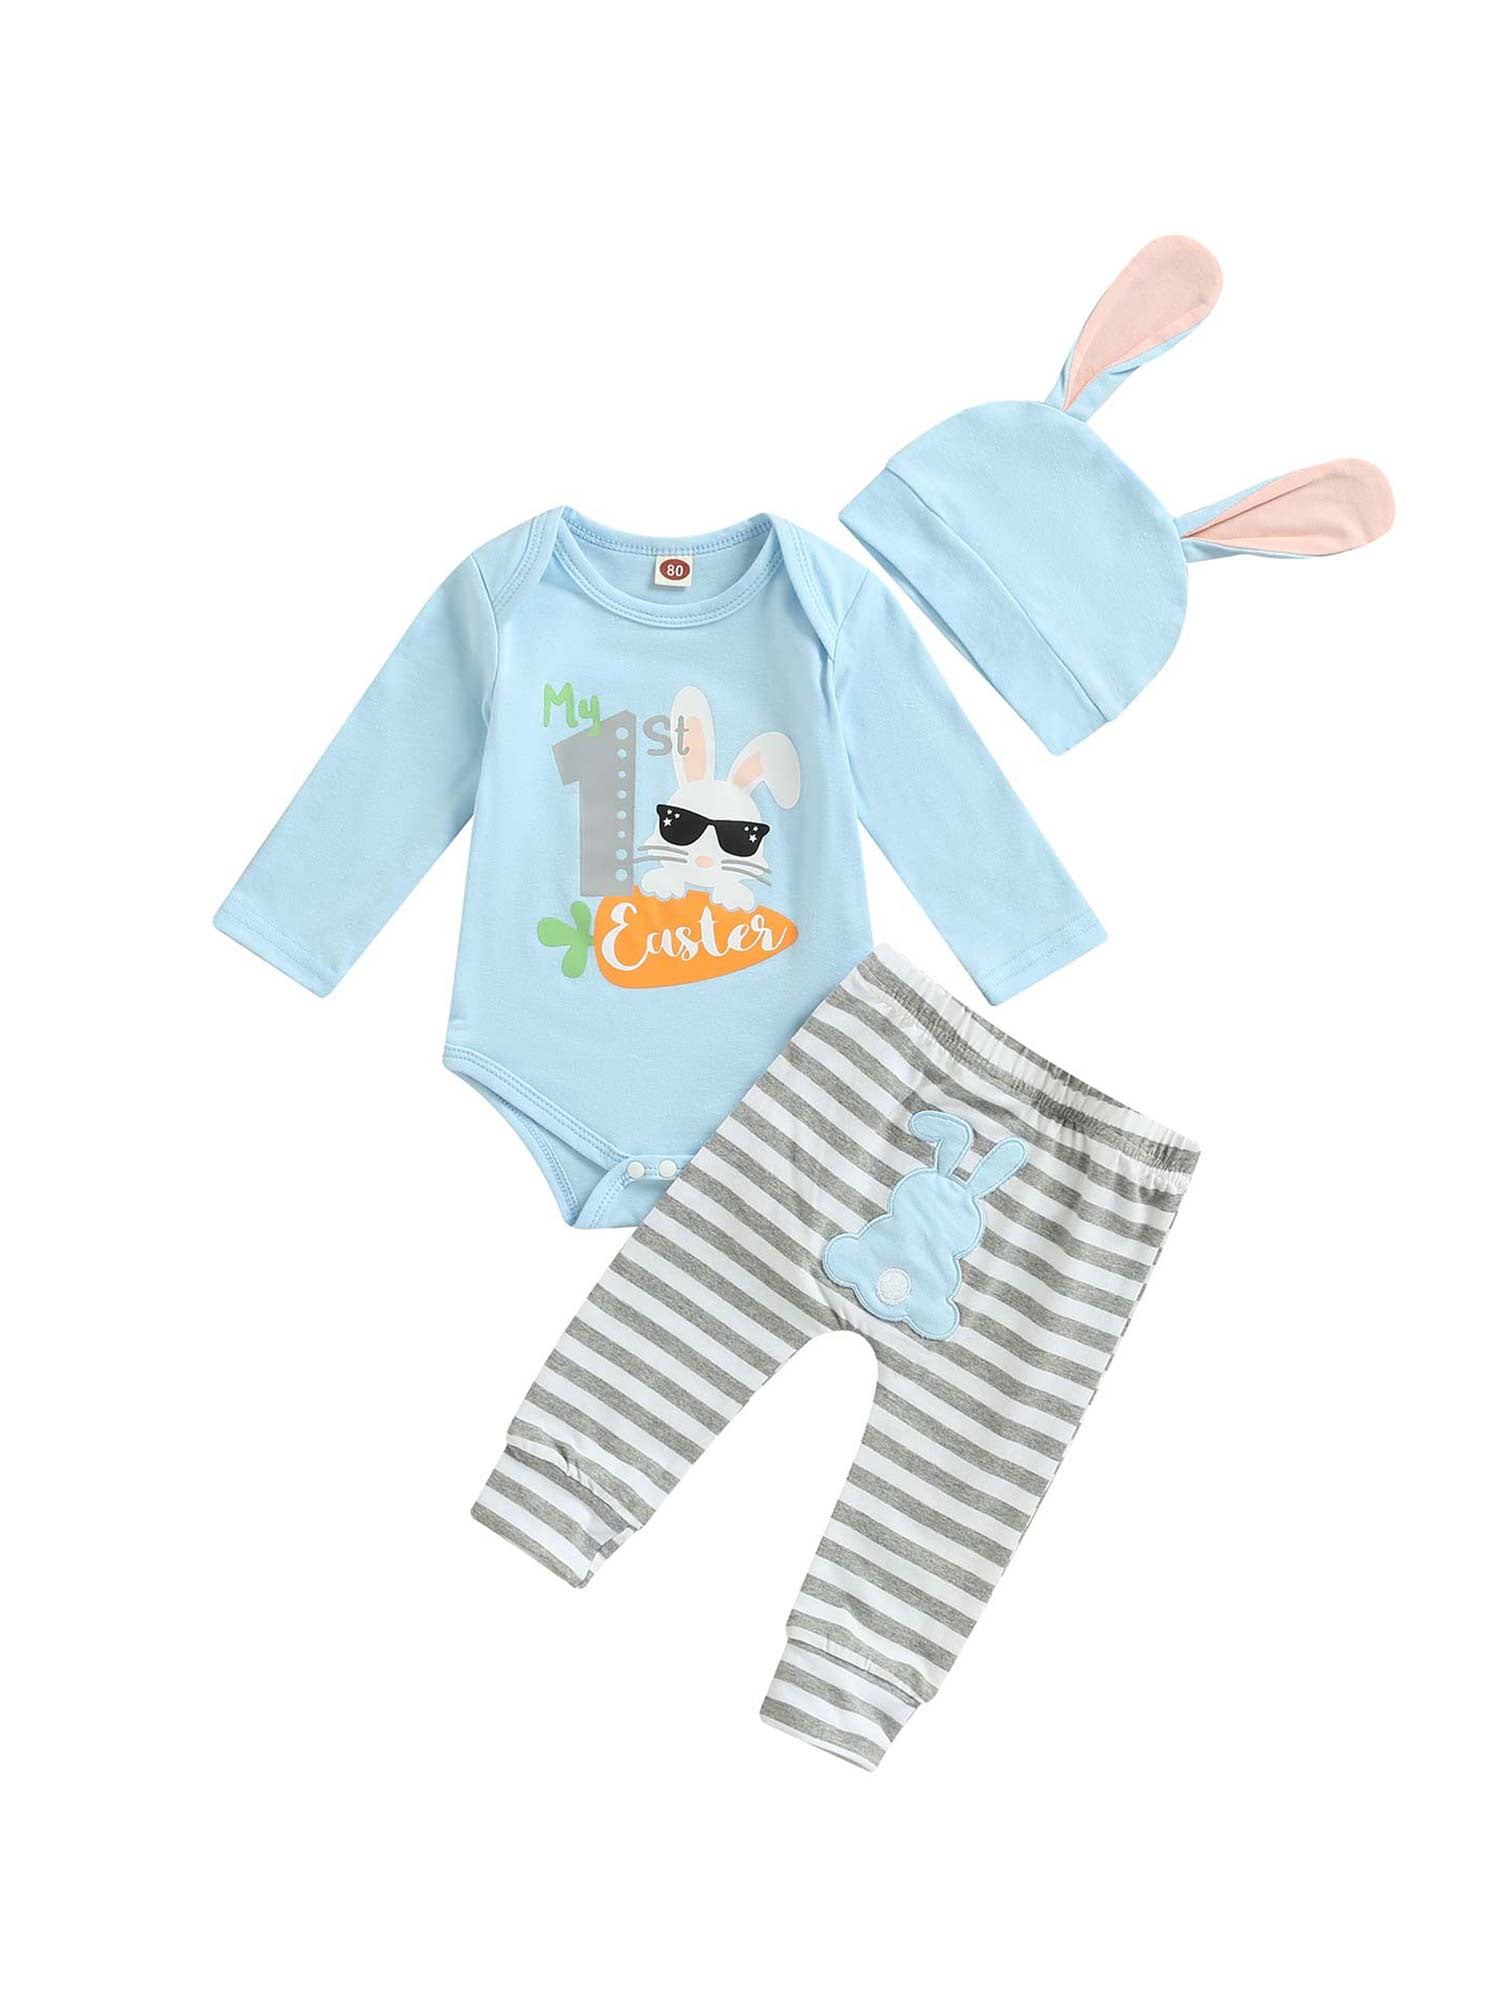 Toddler Infant Girls Outfits Panda Coat Striped Pants Kids Clothes Set 2pcs 